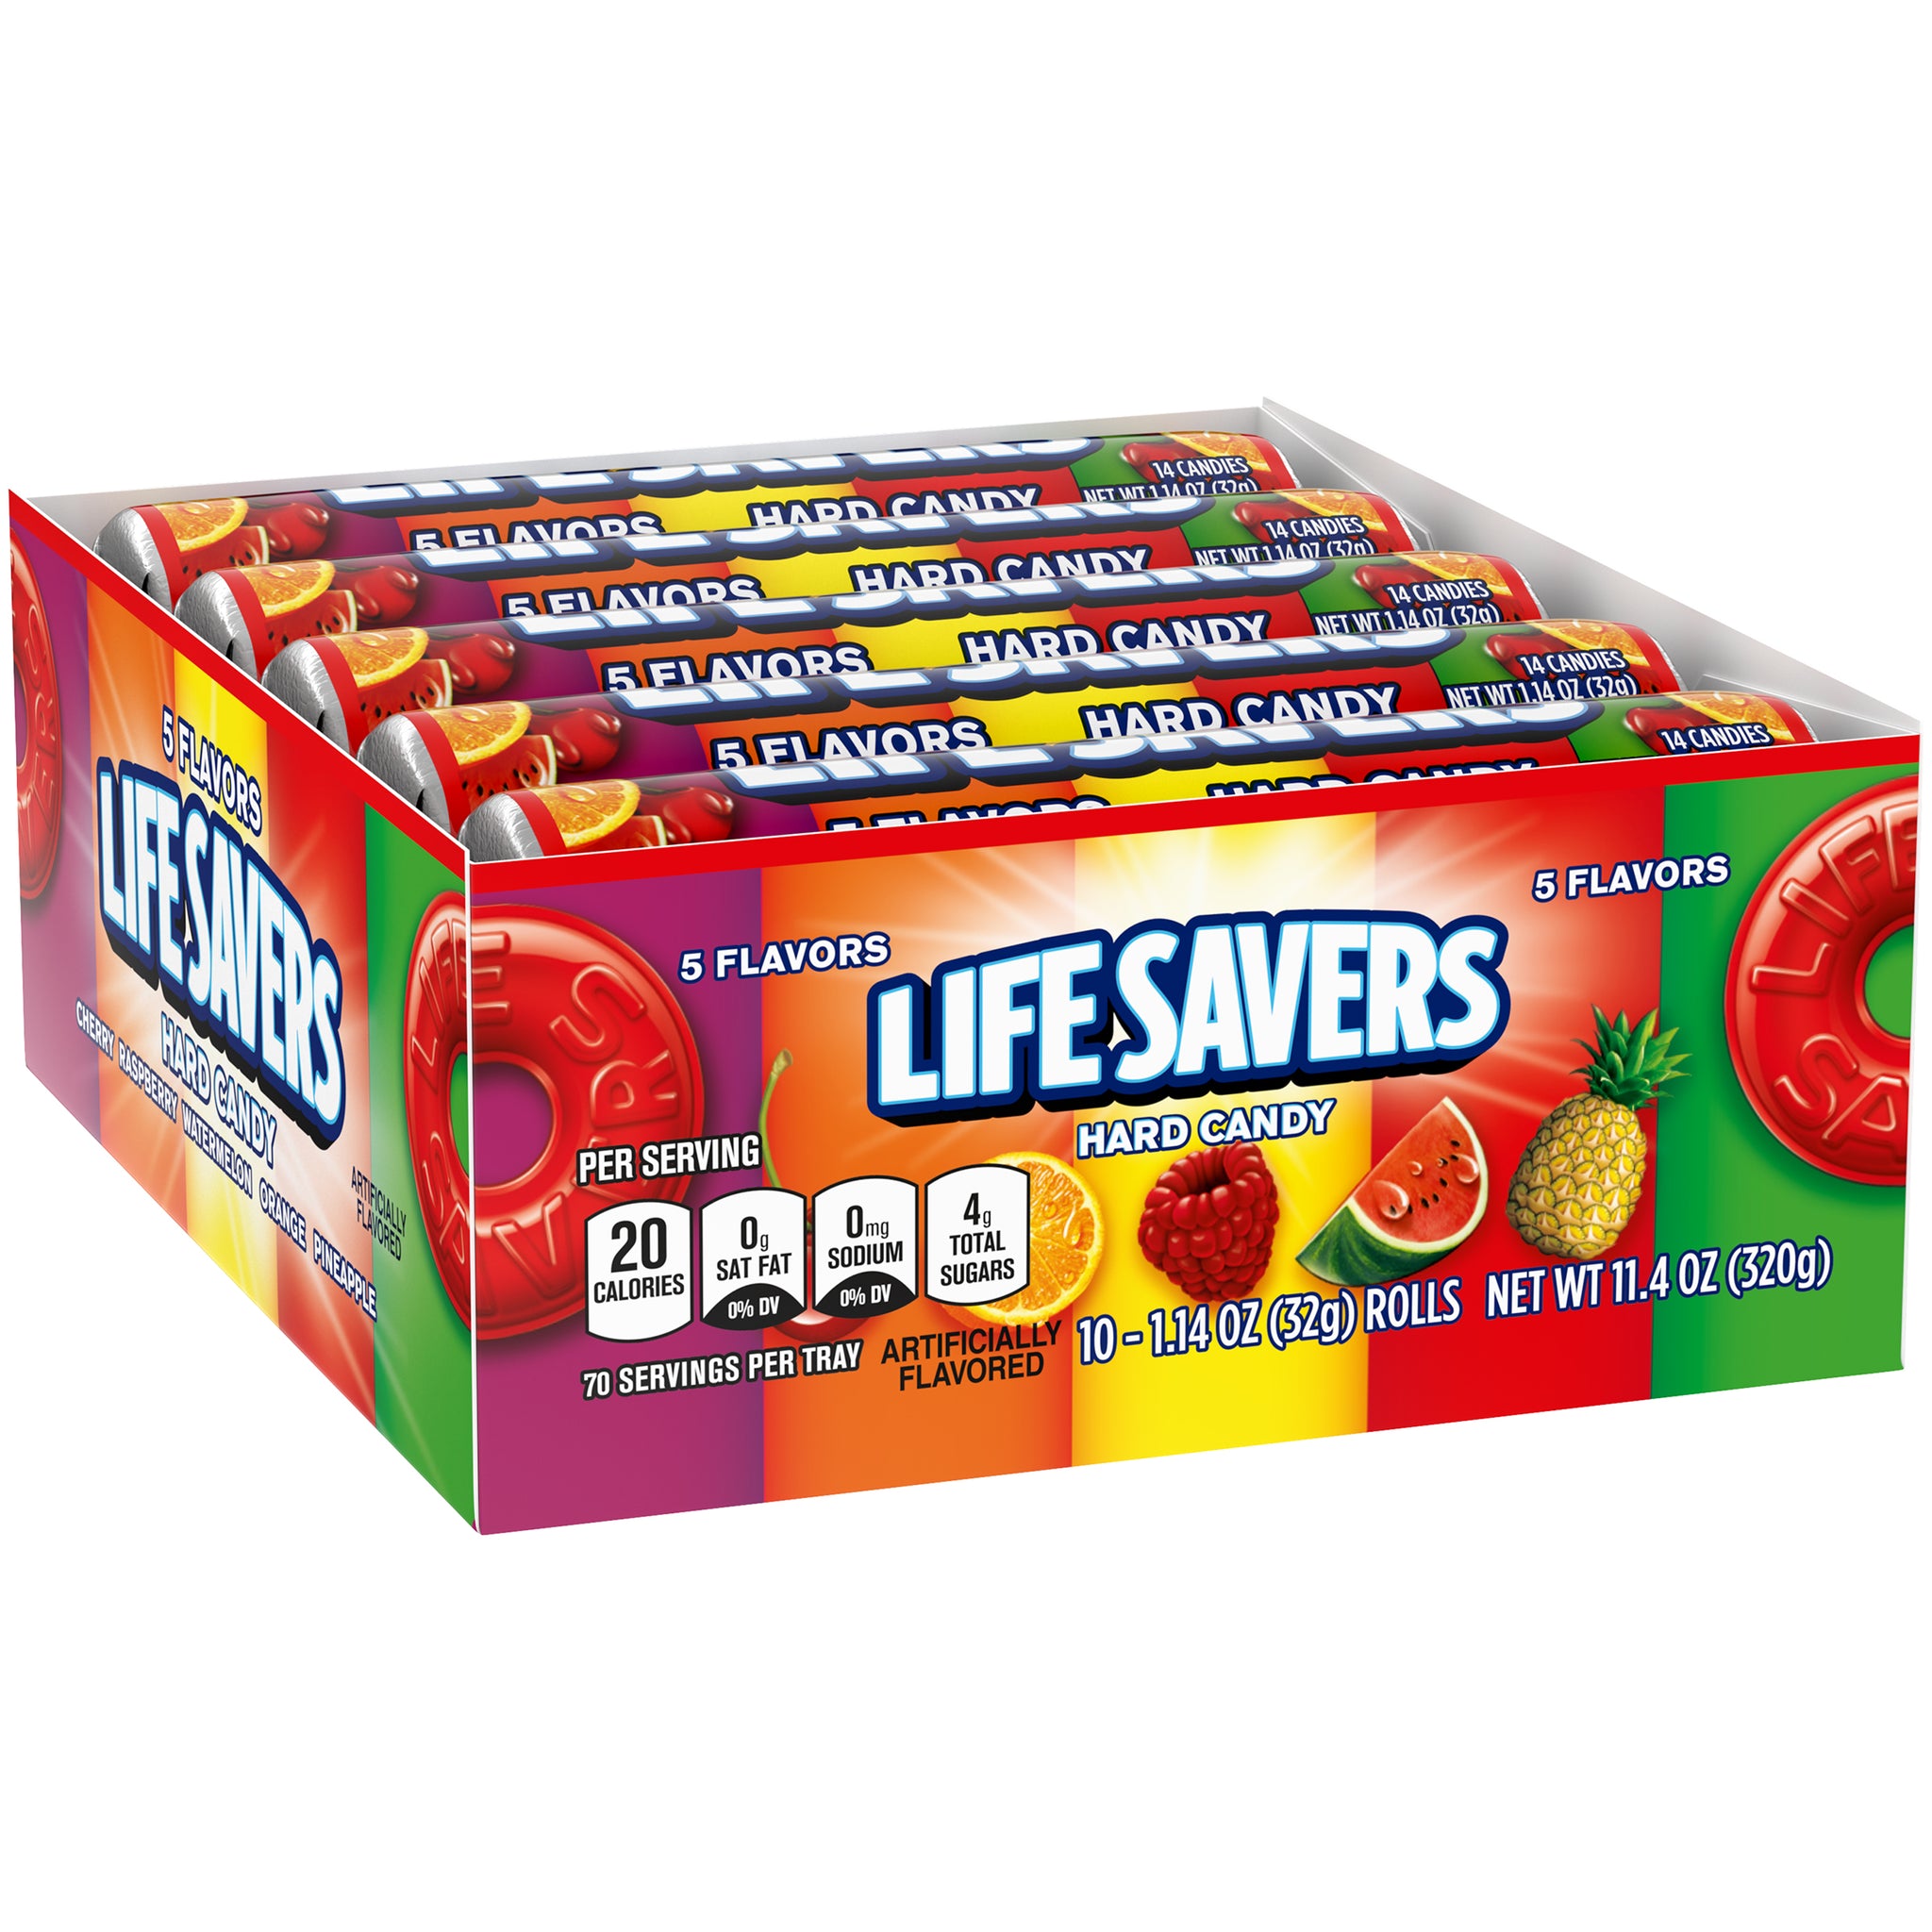 Fruit Roll-Ups - Sugar Life Candy